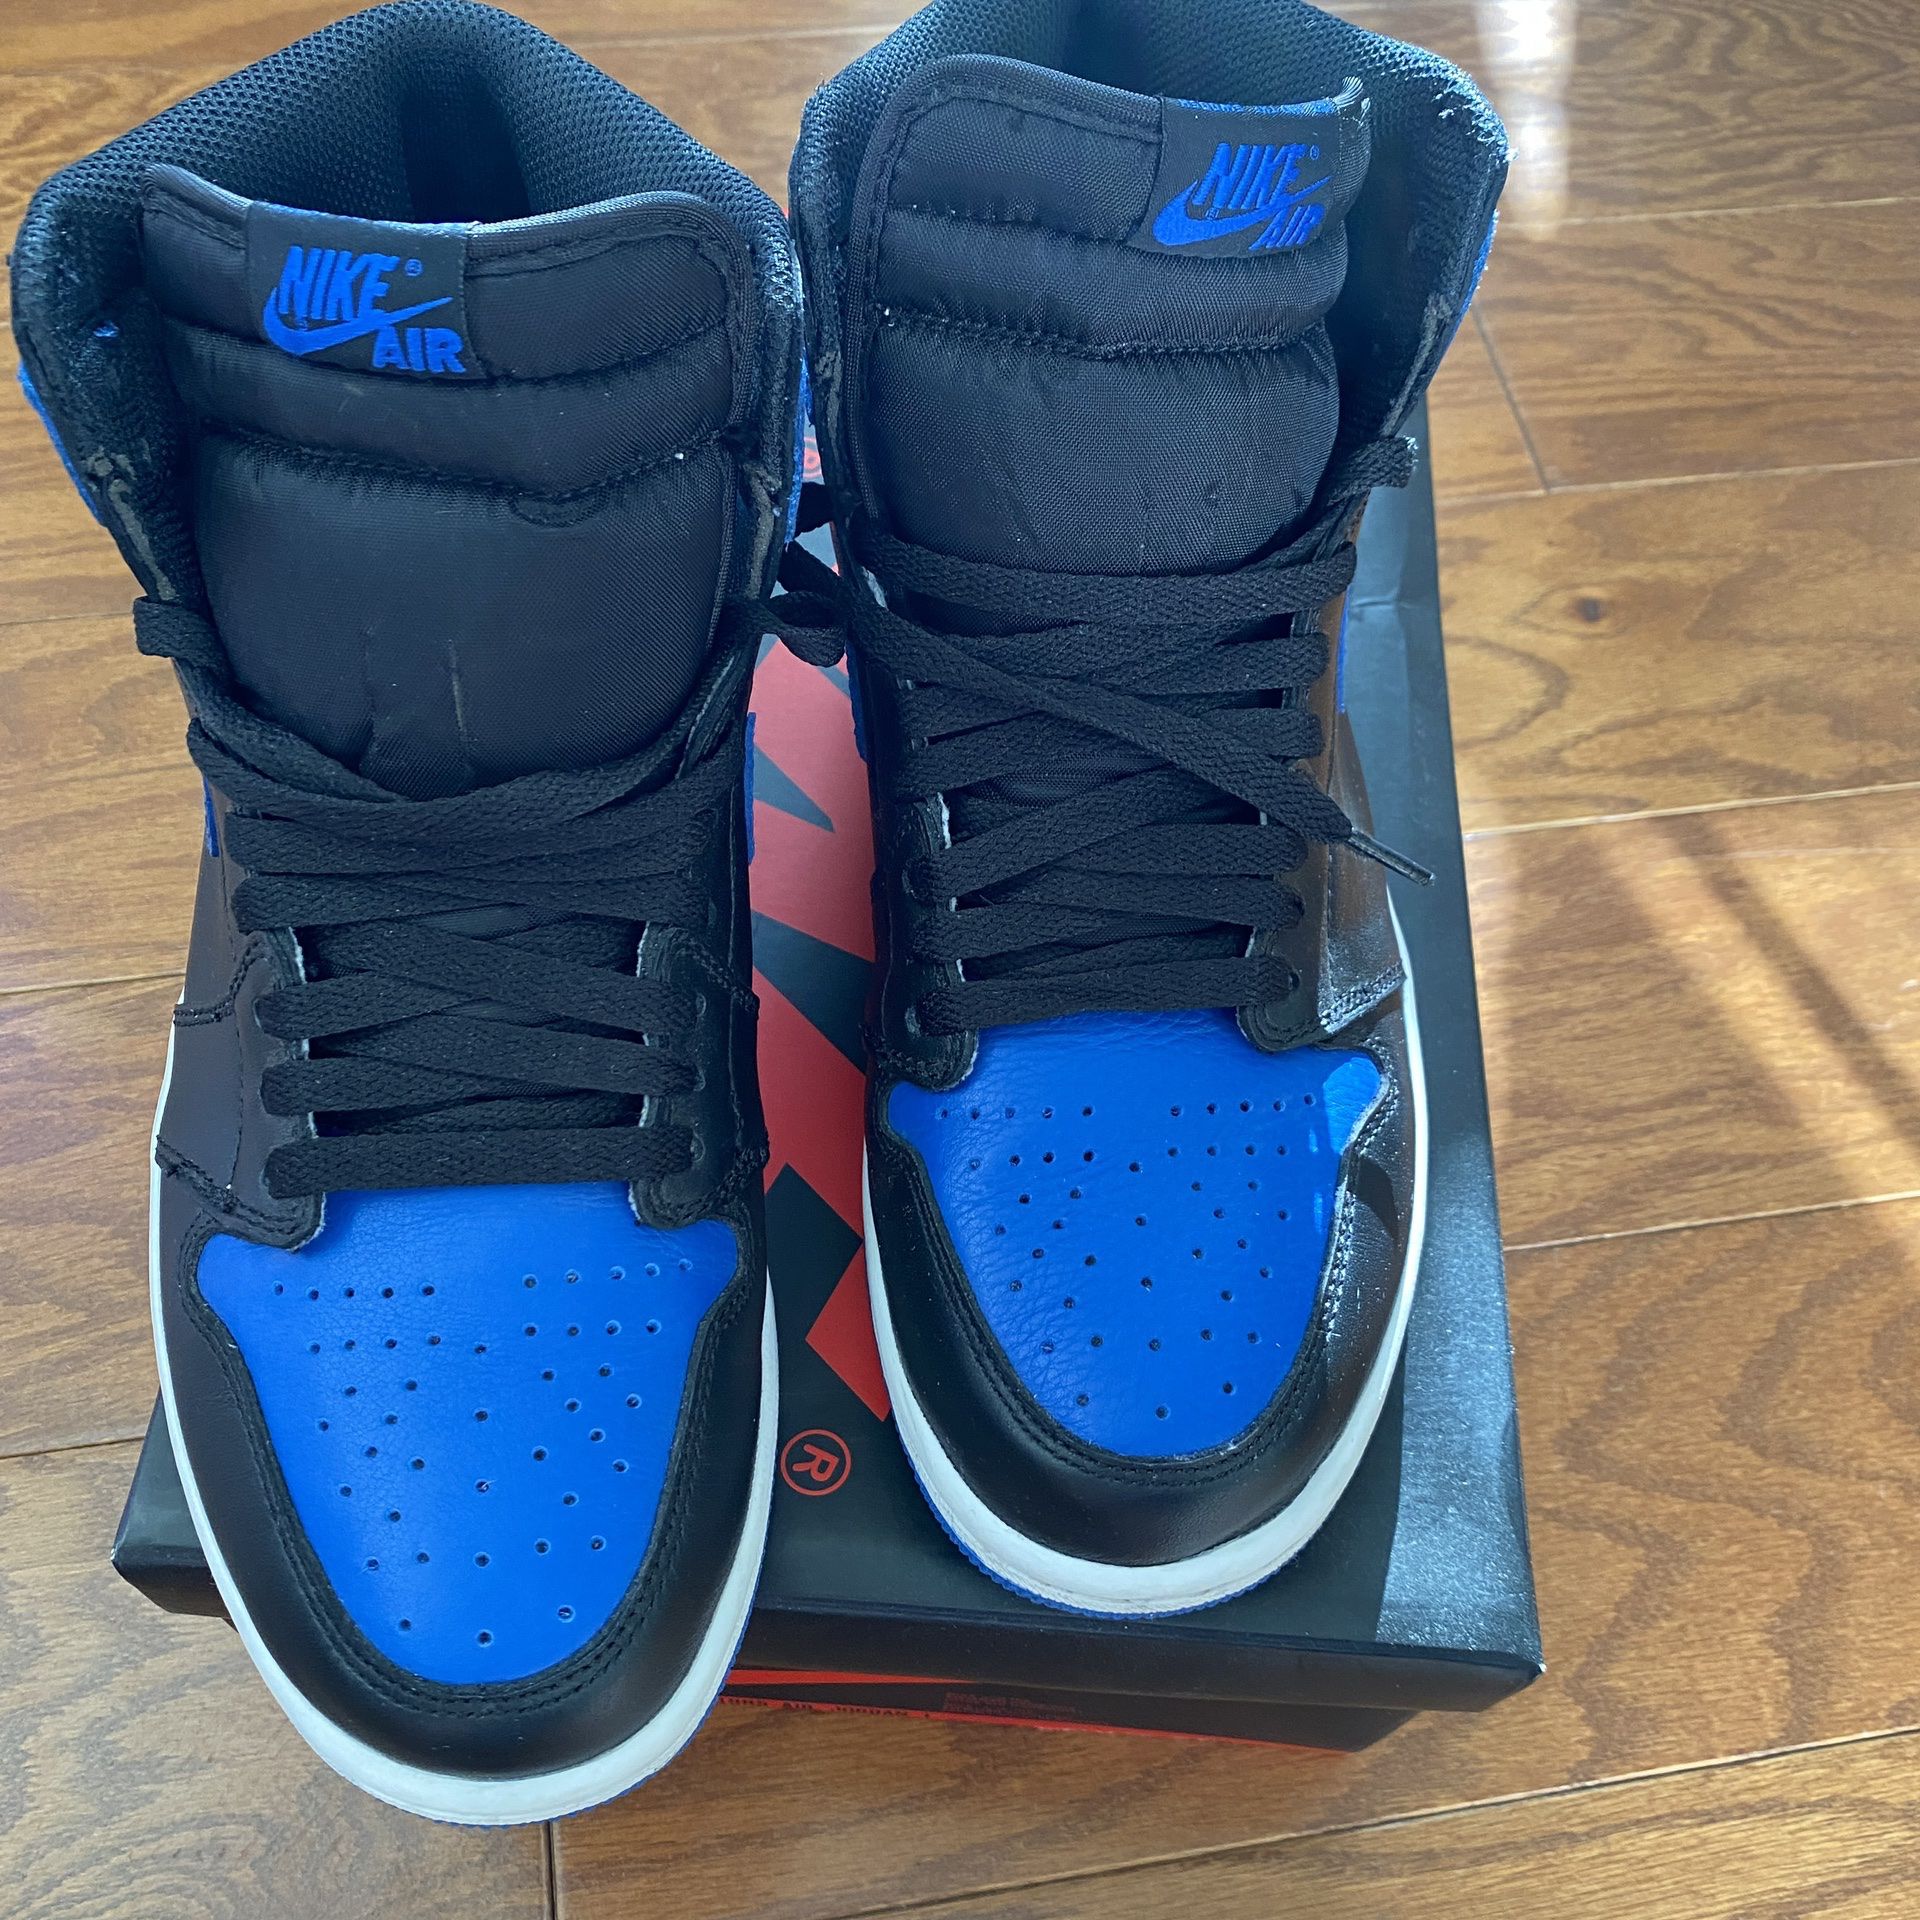 Nike Air Jordan 1 High Og Royal Blue 2017 size 8.5 Men Shoes